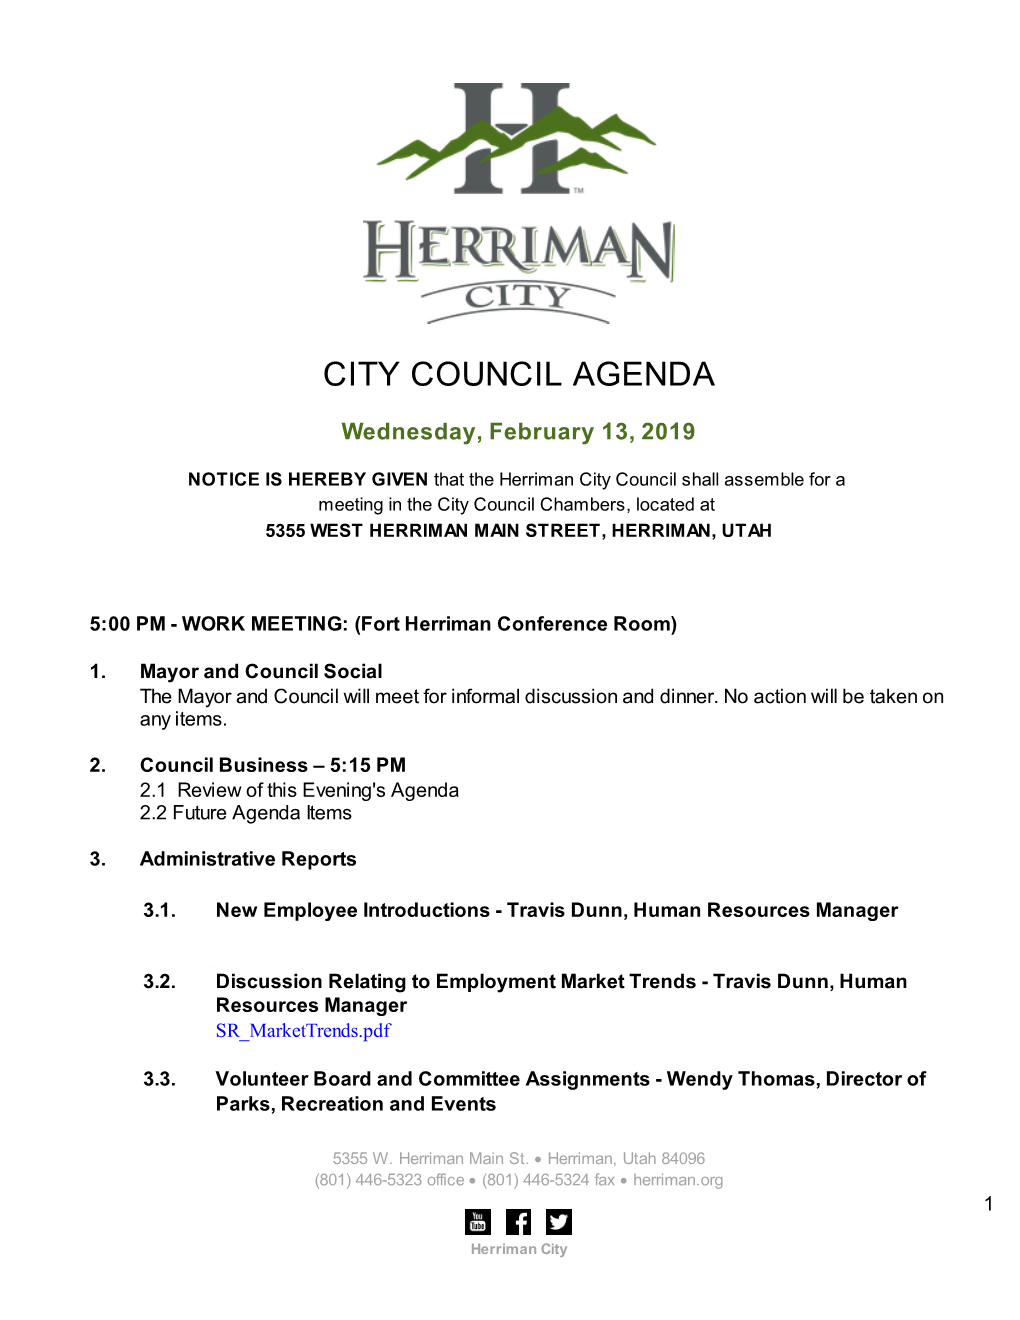 City Council Agenda